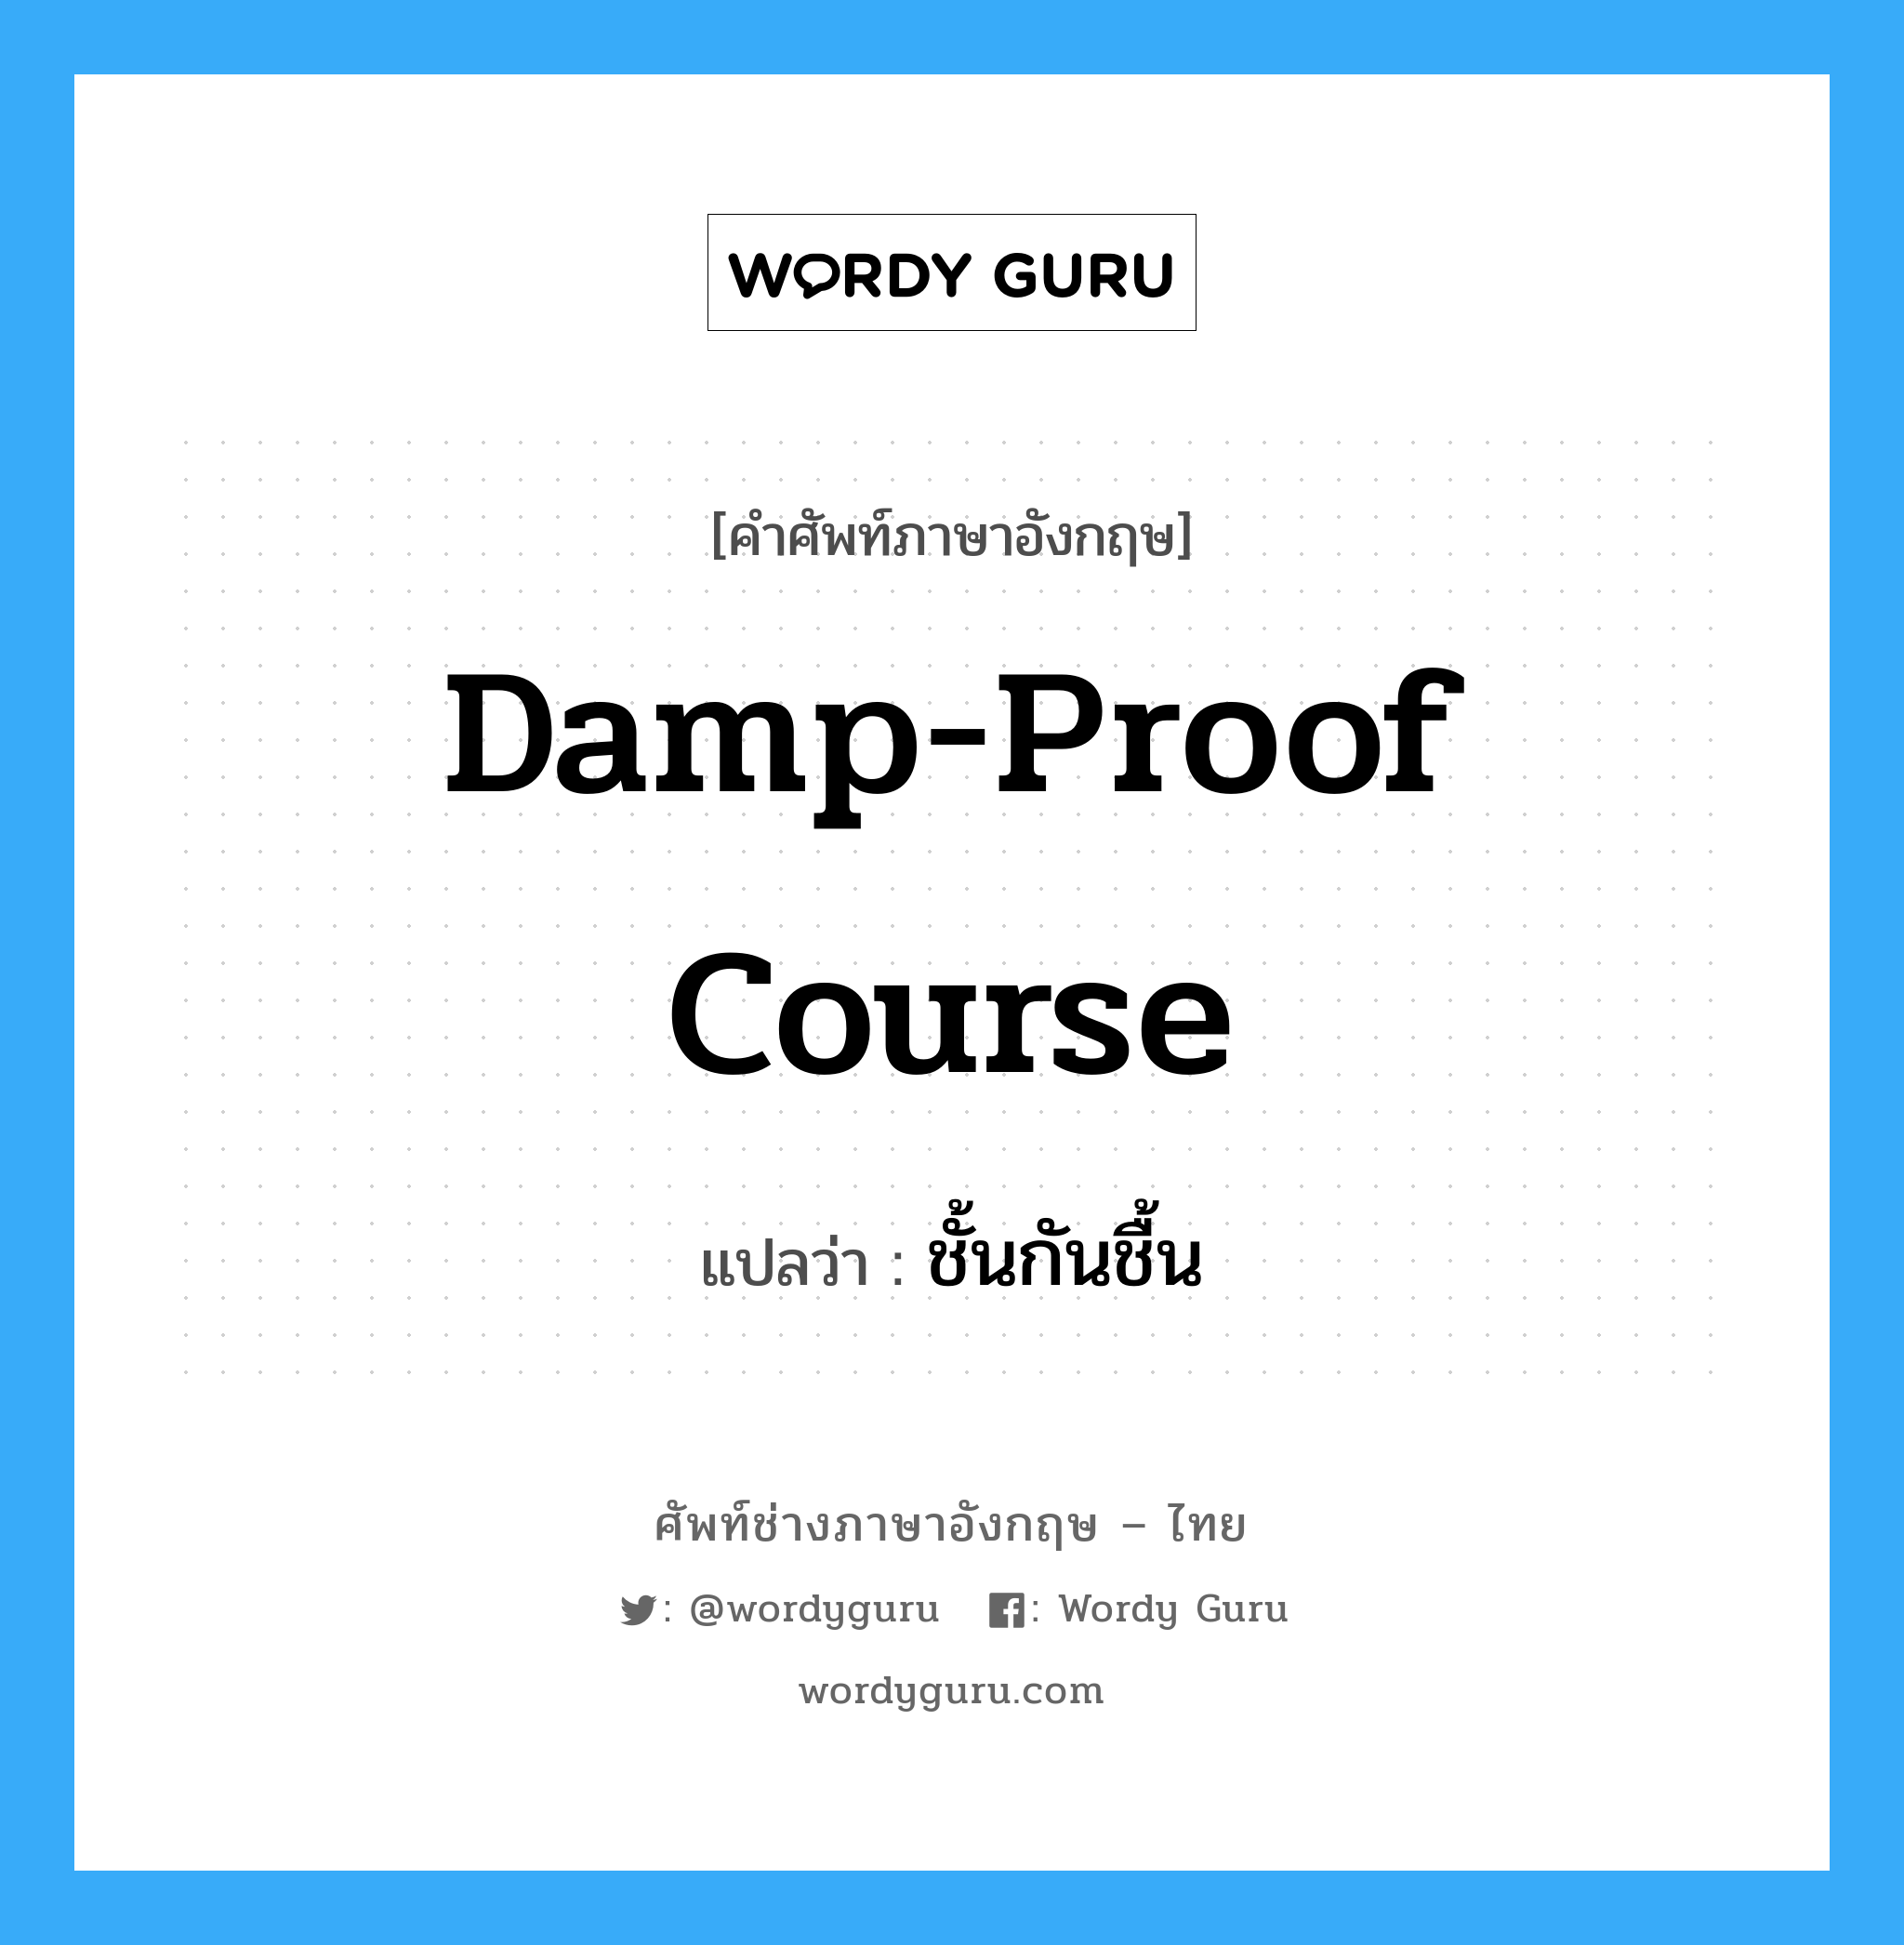 damp proof course แปลว่า?, คำศัพท์ช่างภาษาอังกฤษ - ไทย damp-proof course คำศัพท์ภาษาอังกฤษ damp-proof course แปลว่า ชั้นกันชื้น